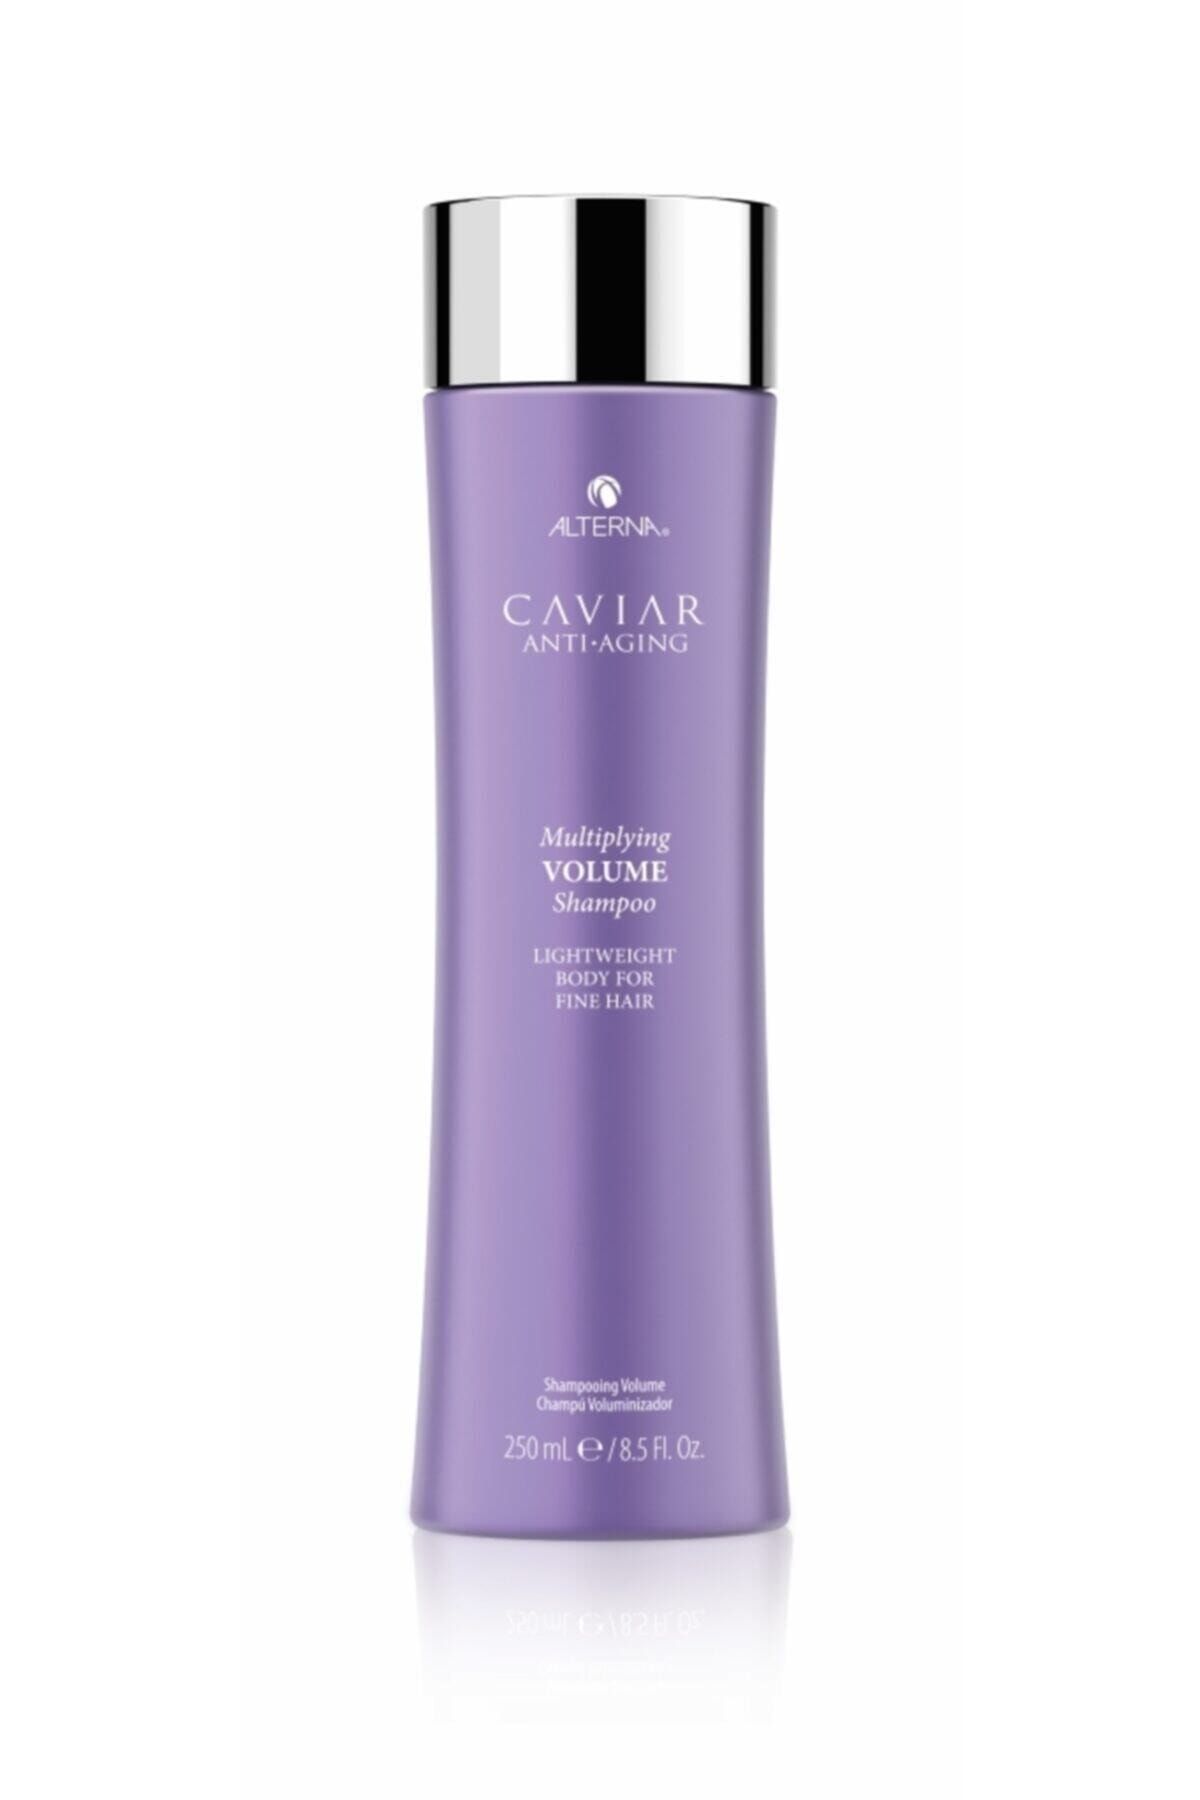 alterna caviar volume szampon blog